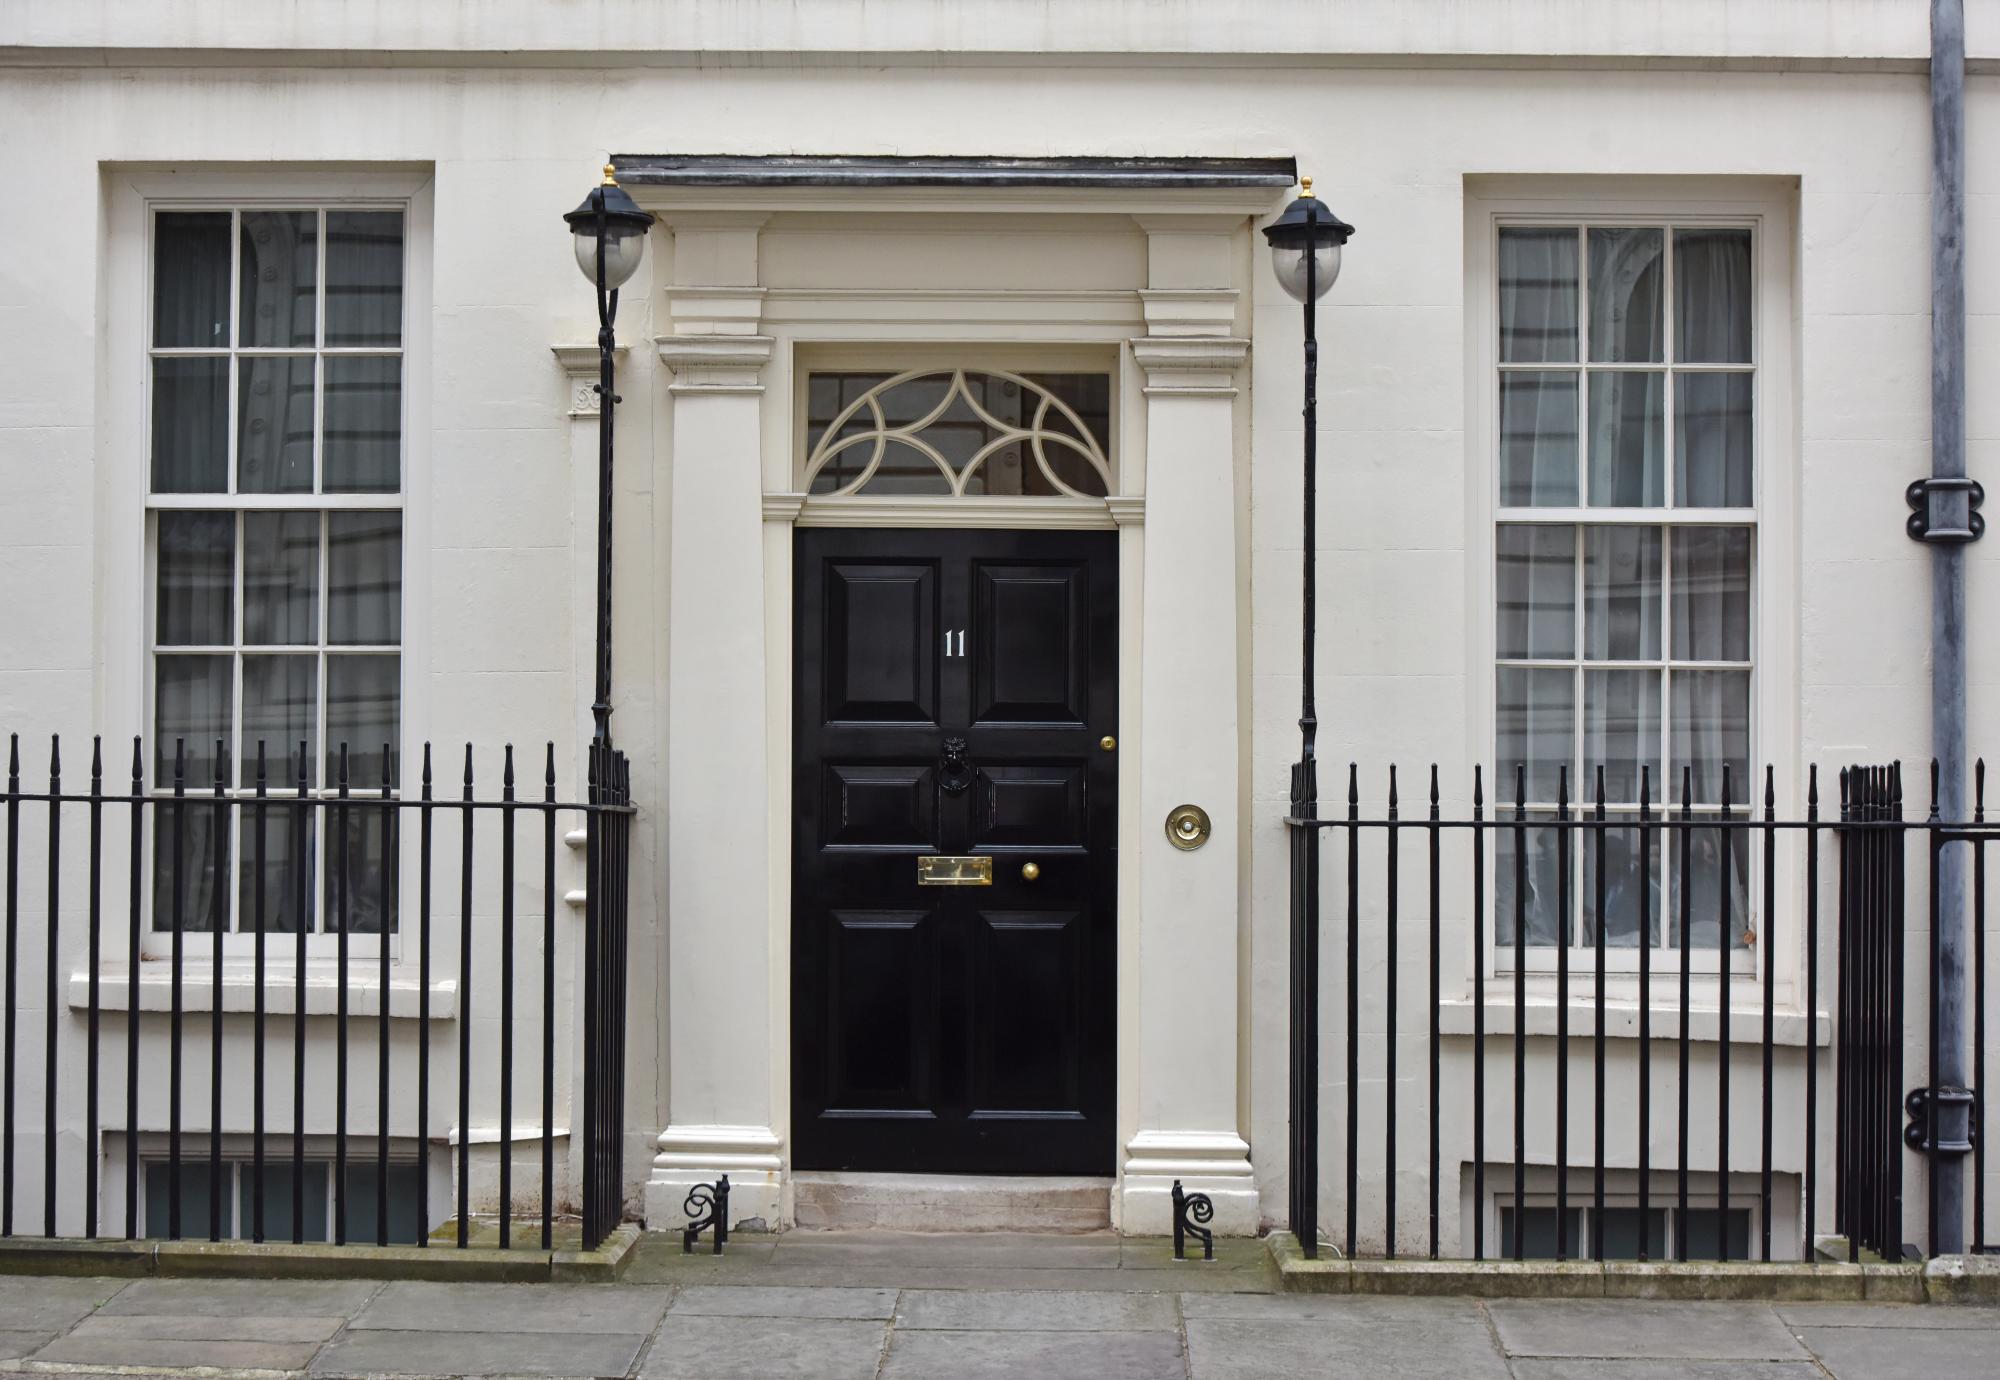 The front door of 11 Downing Street